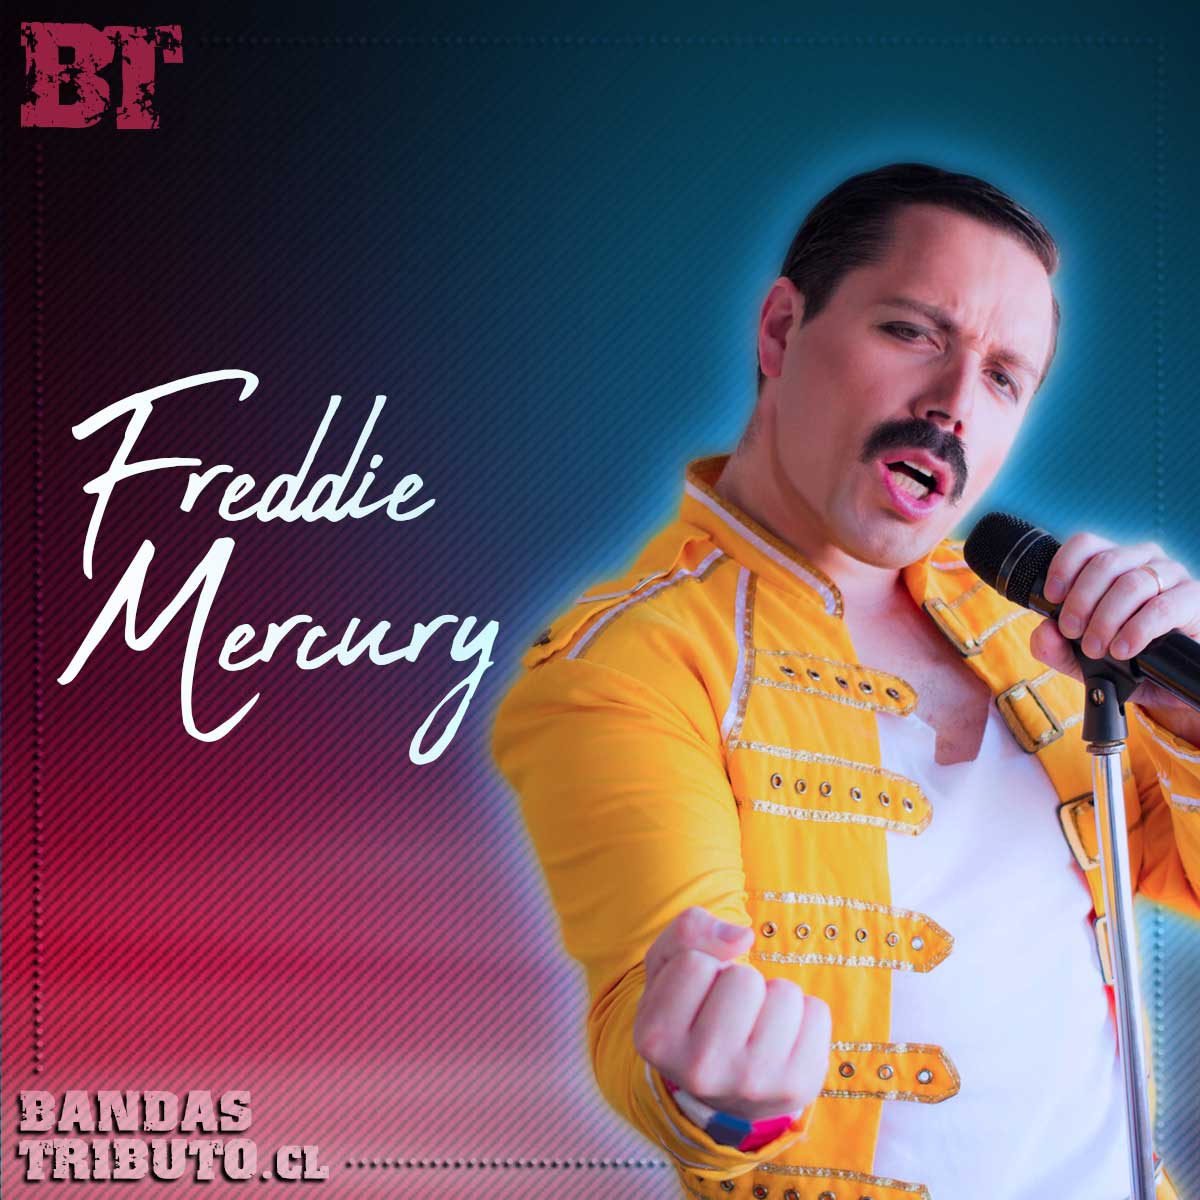 Doble Freddie Mercury